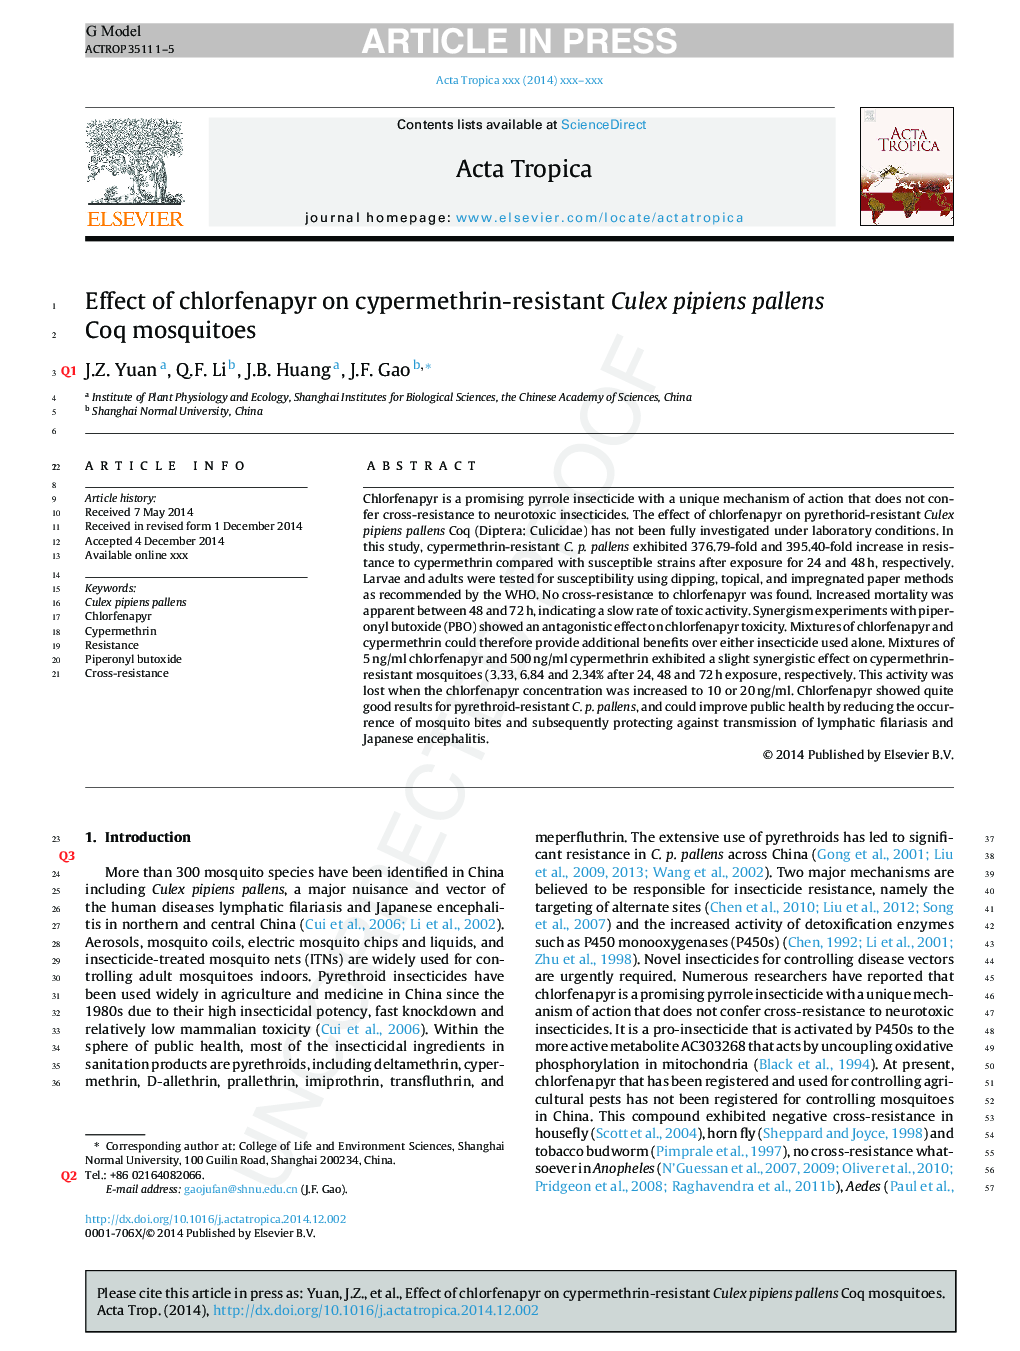 Effect of chlorfenapyr on cypermethrin-resistant Culex pipiens pallens Coq mosquitoes